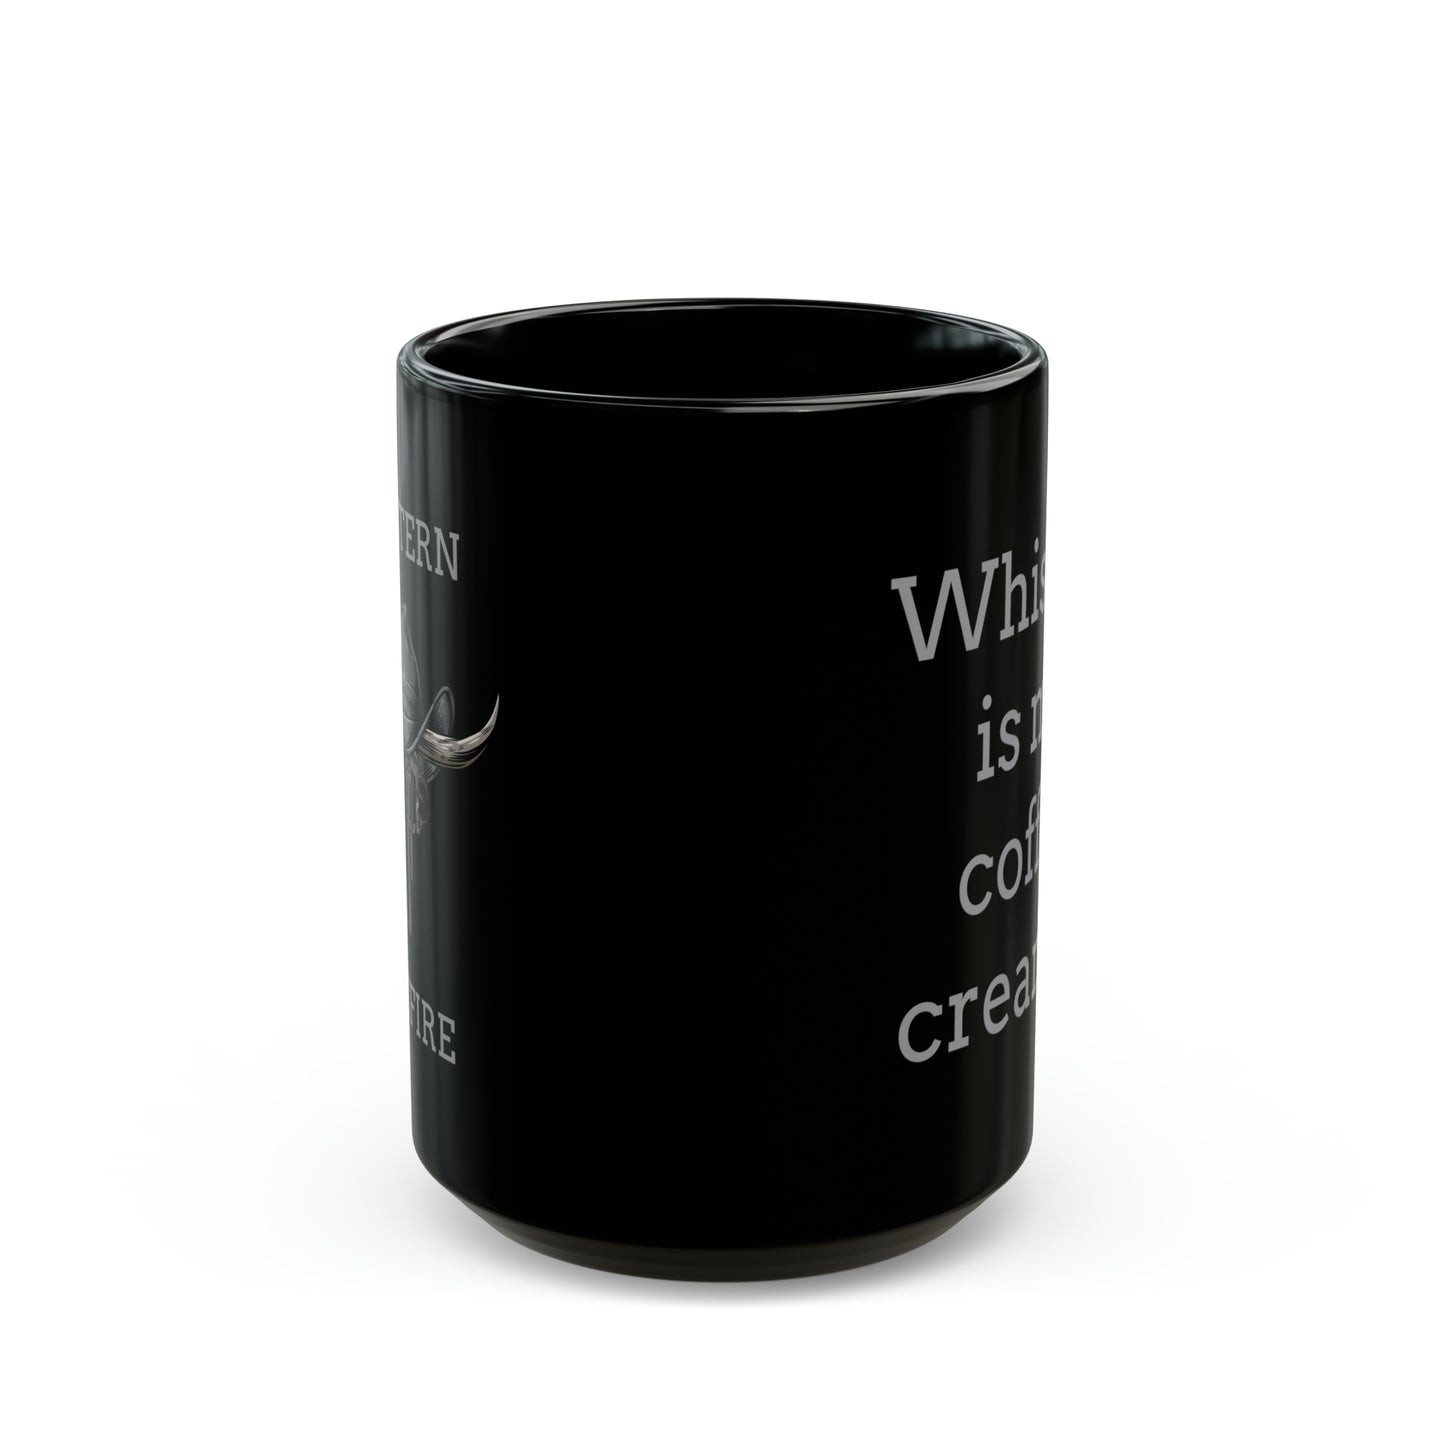 Whiskey Is My Coffee Creamer Mug